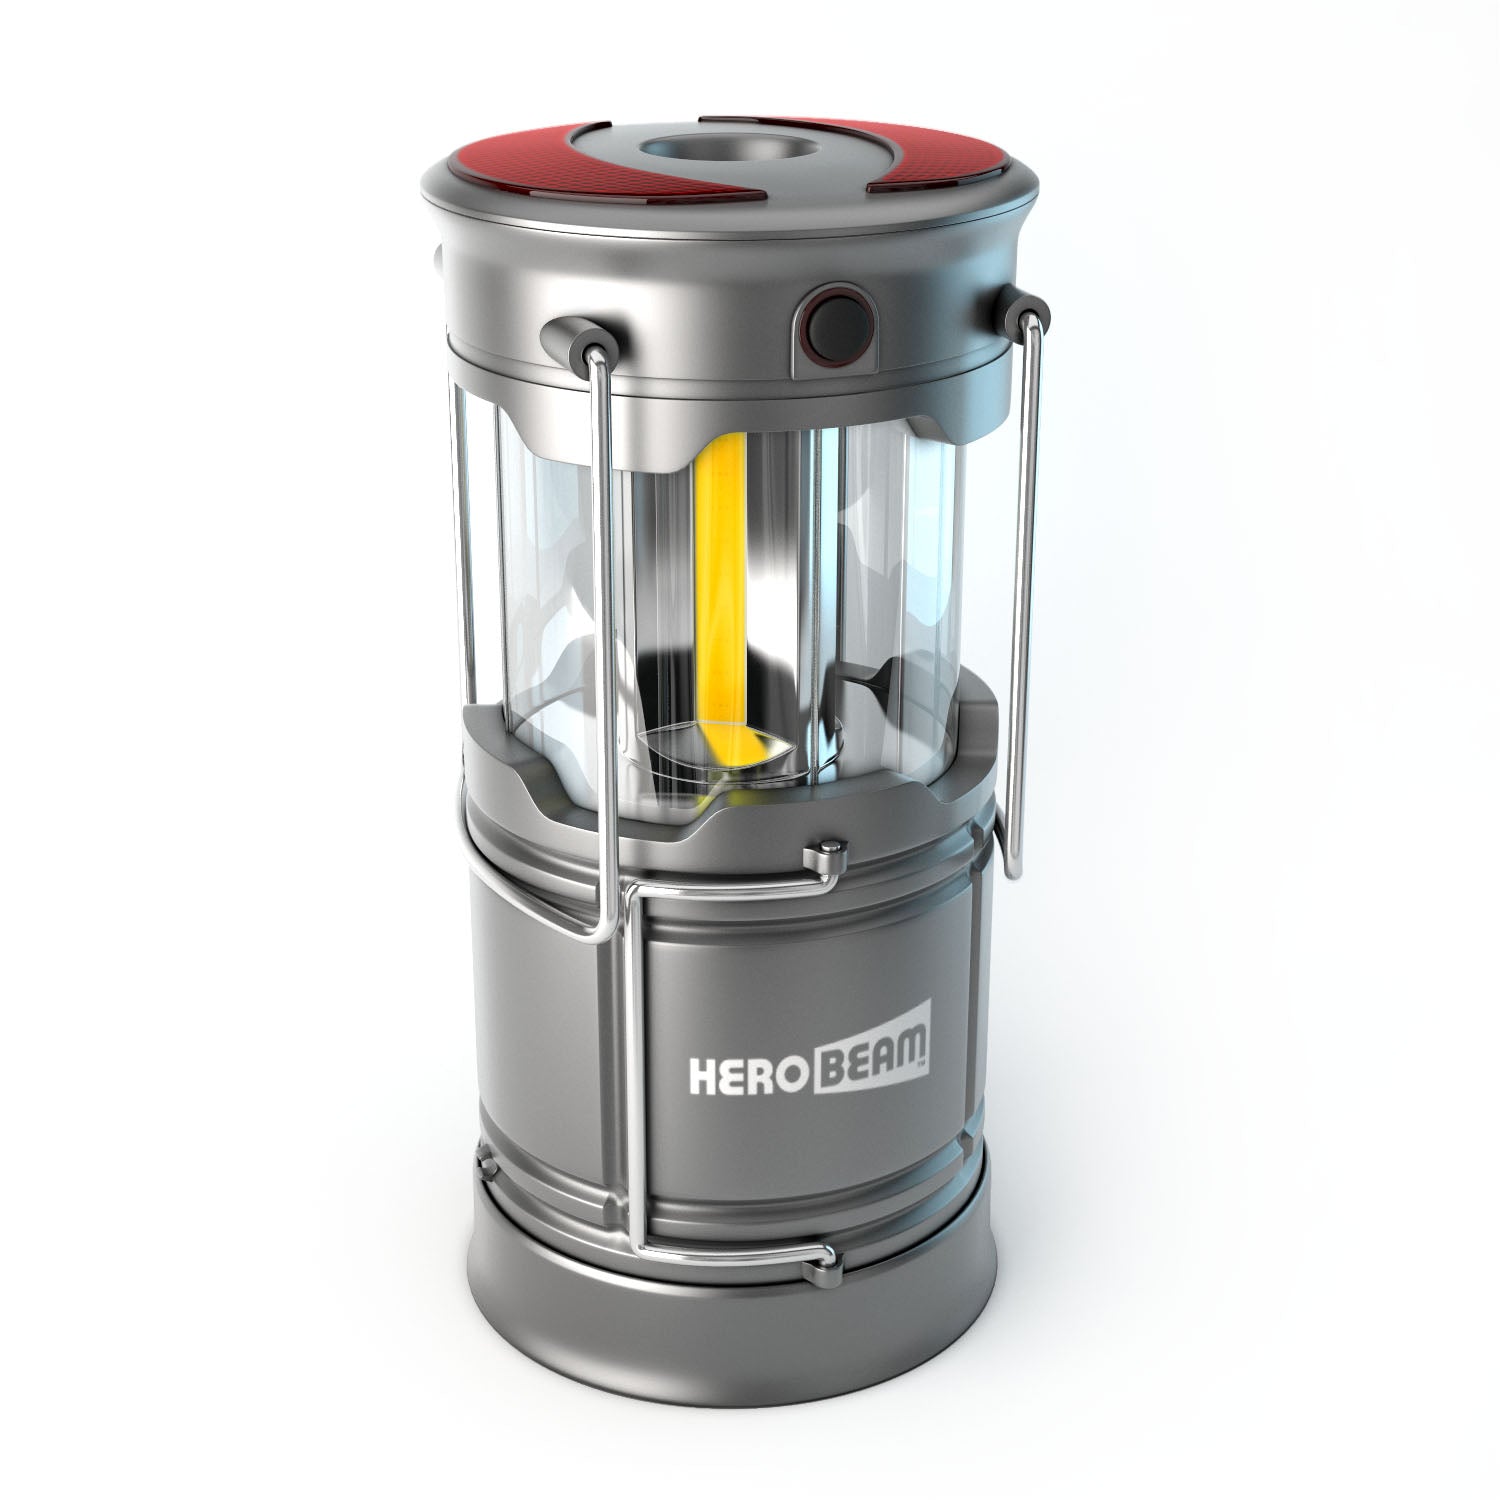 LED Rechargeable Lantern V3 with Flashlight & Emergency Beacons